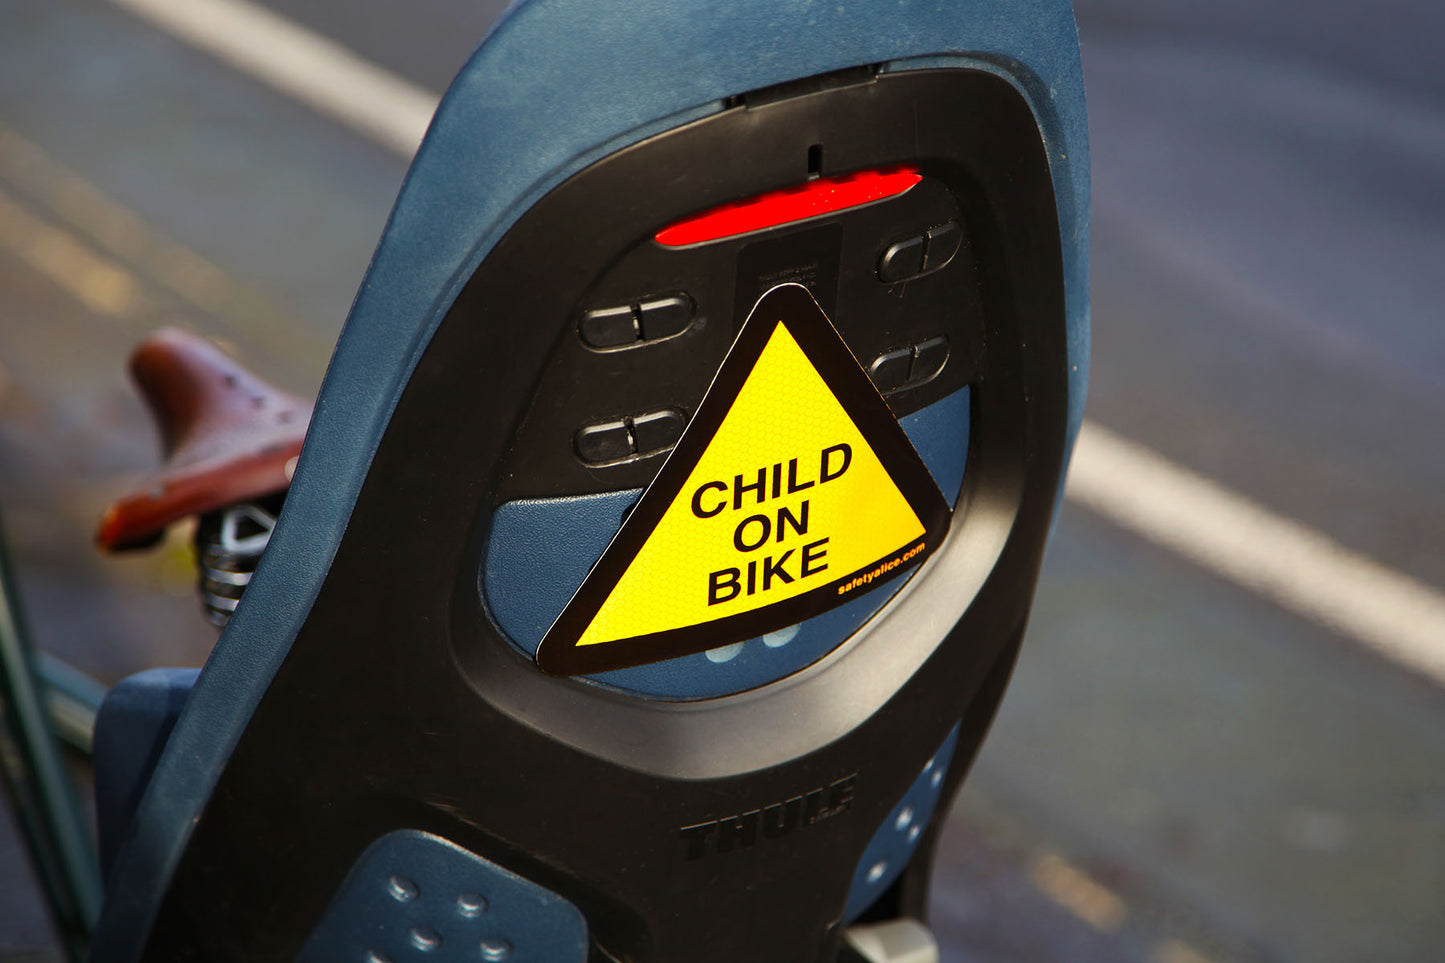 Child On Bike child bike seat and cargo bike reflective sticker